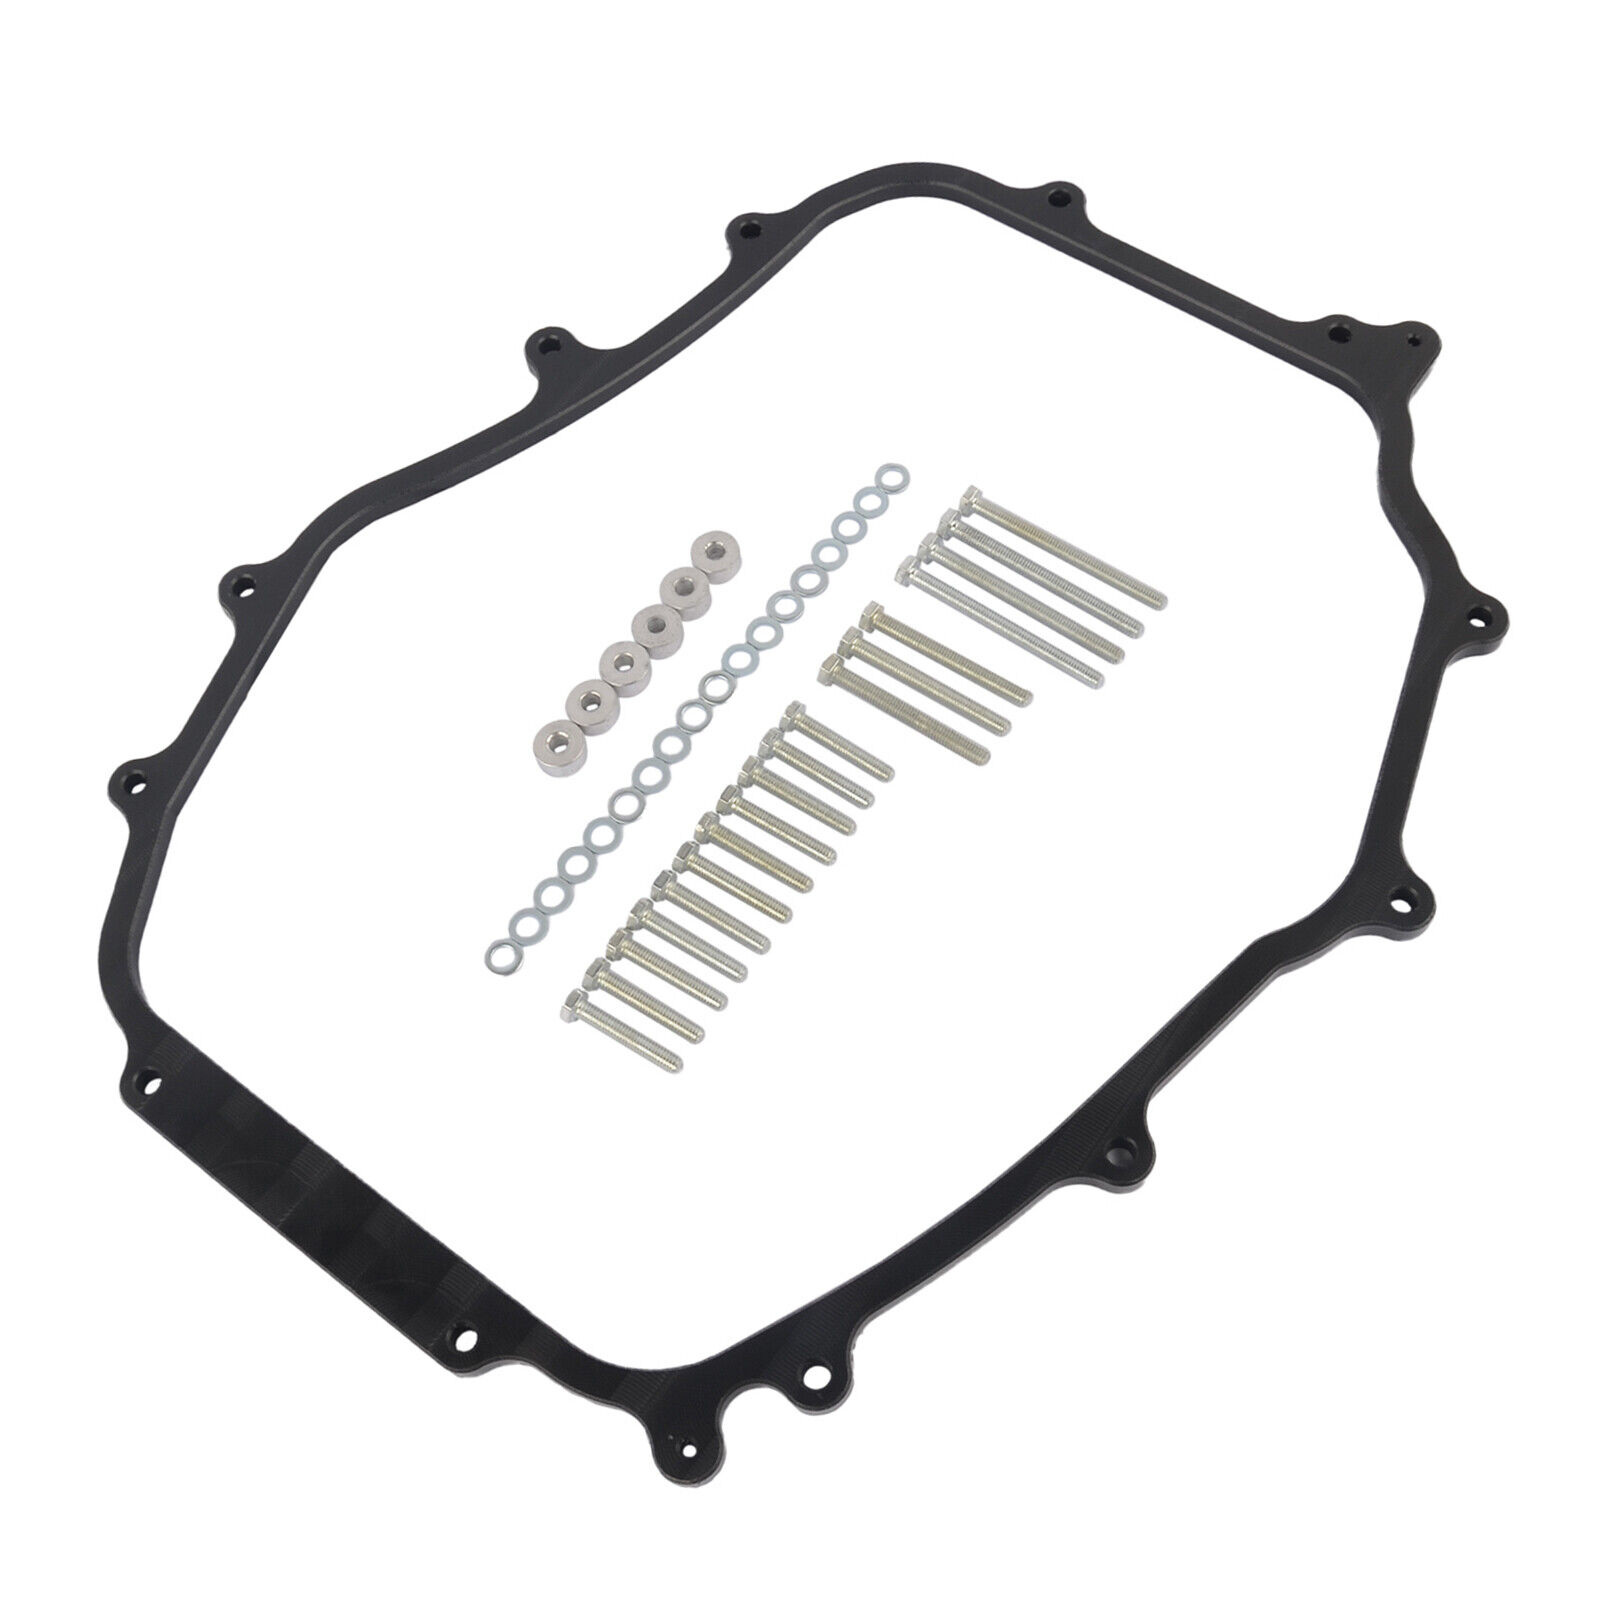 Thermal Intake Manifold 5/16 Plenum Spacer Kit for Nissan 350Z Infiniti G35 VQ35